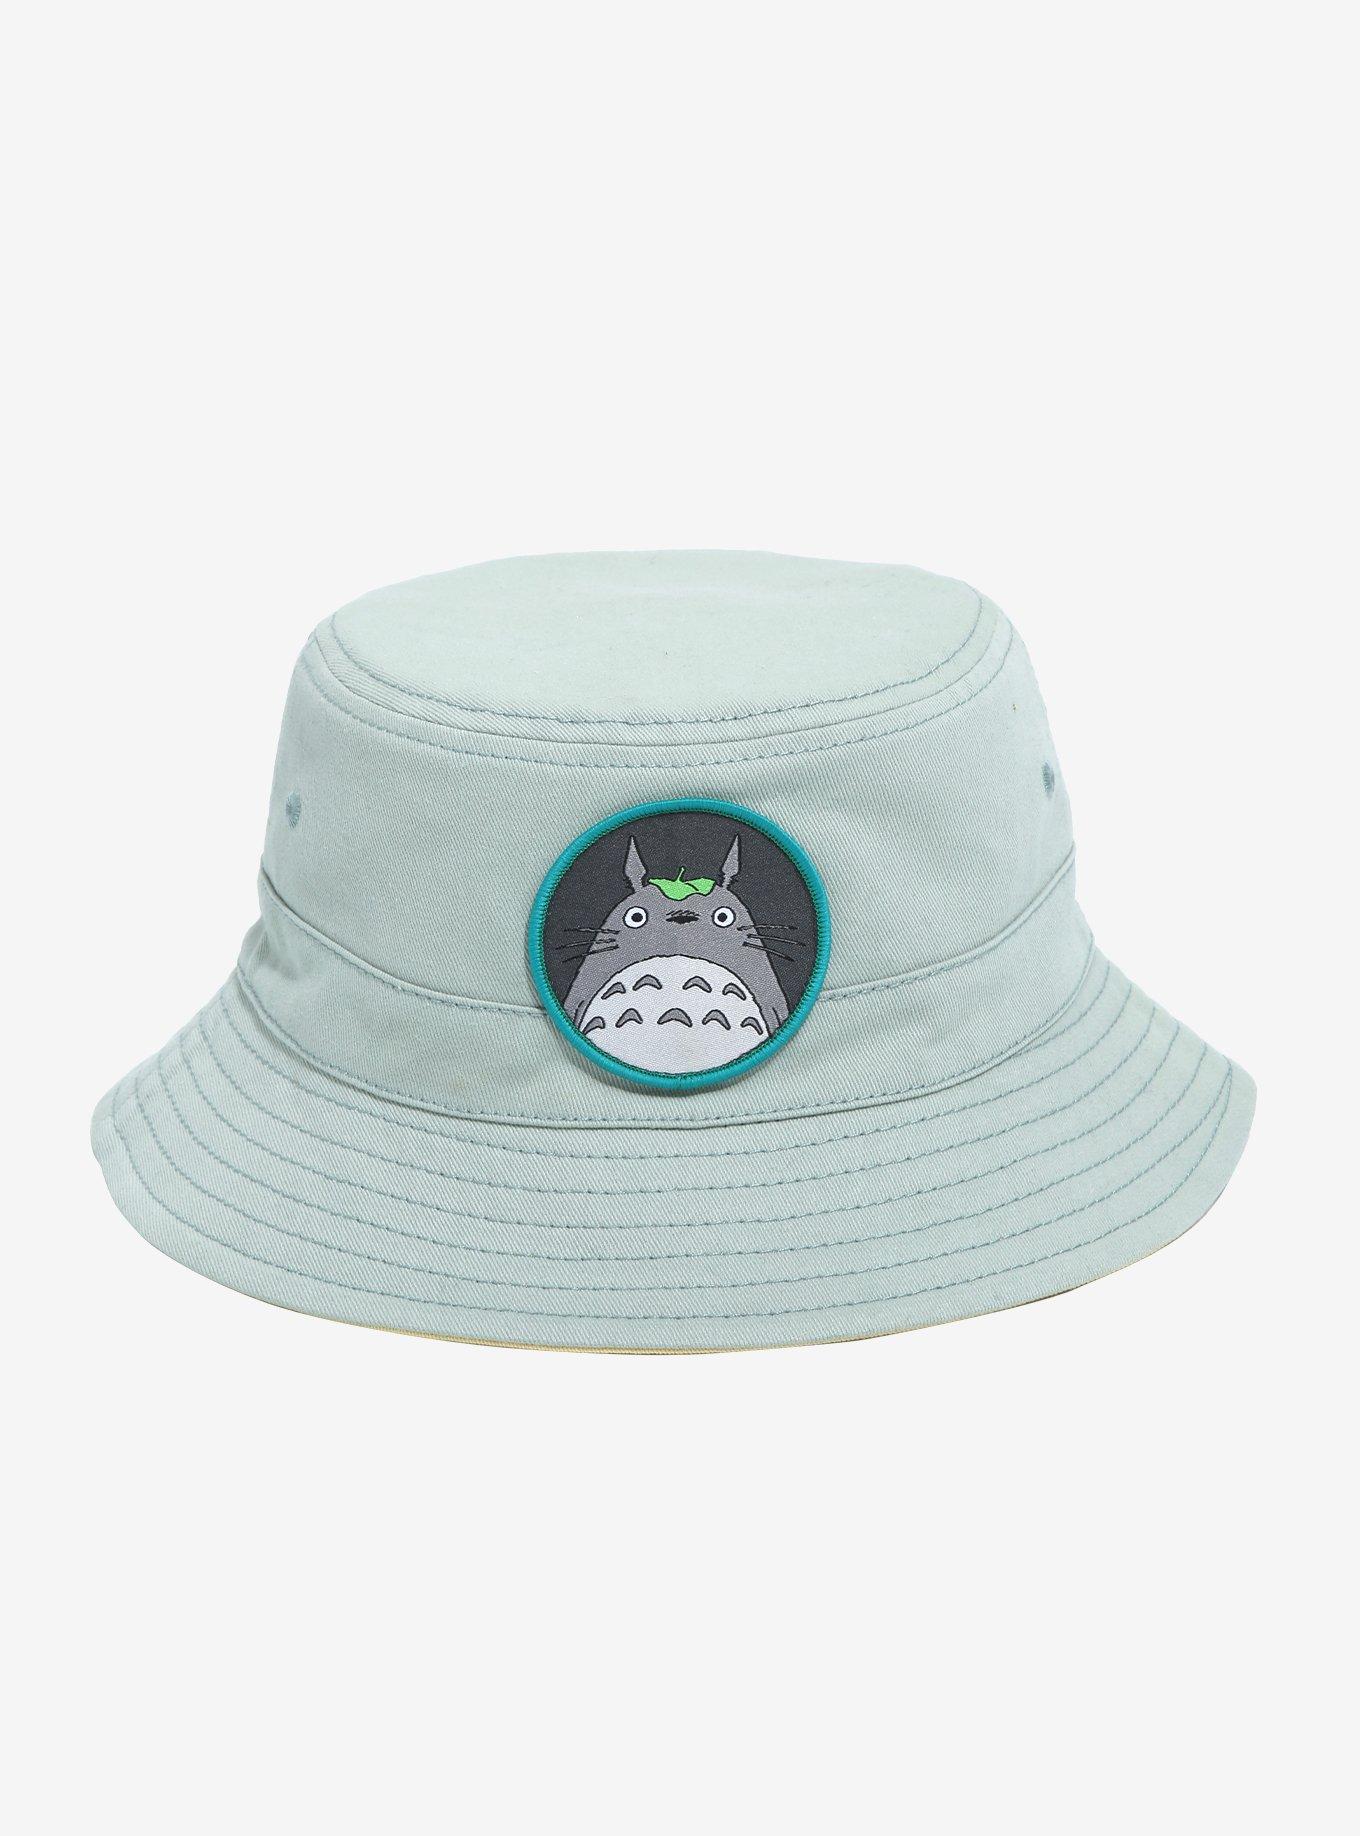 Studio Ghibli My Neighbor Totoro Catbus & Totoro Reversible Bucket Hat ...